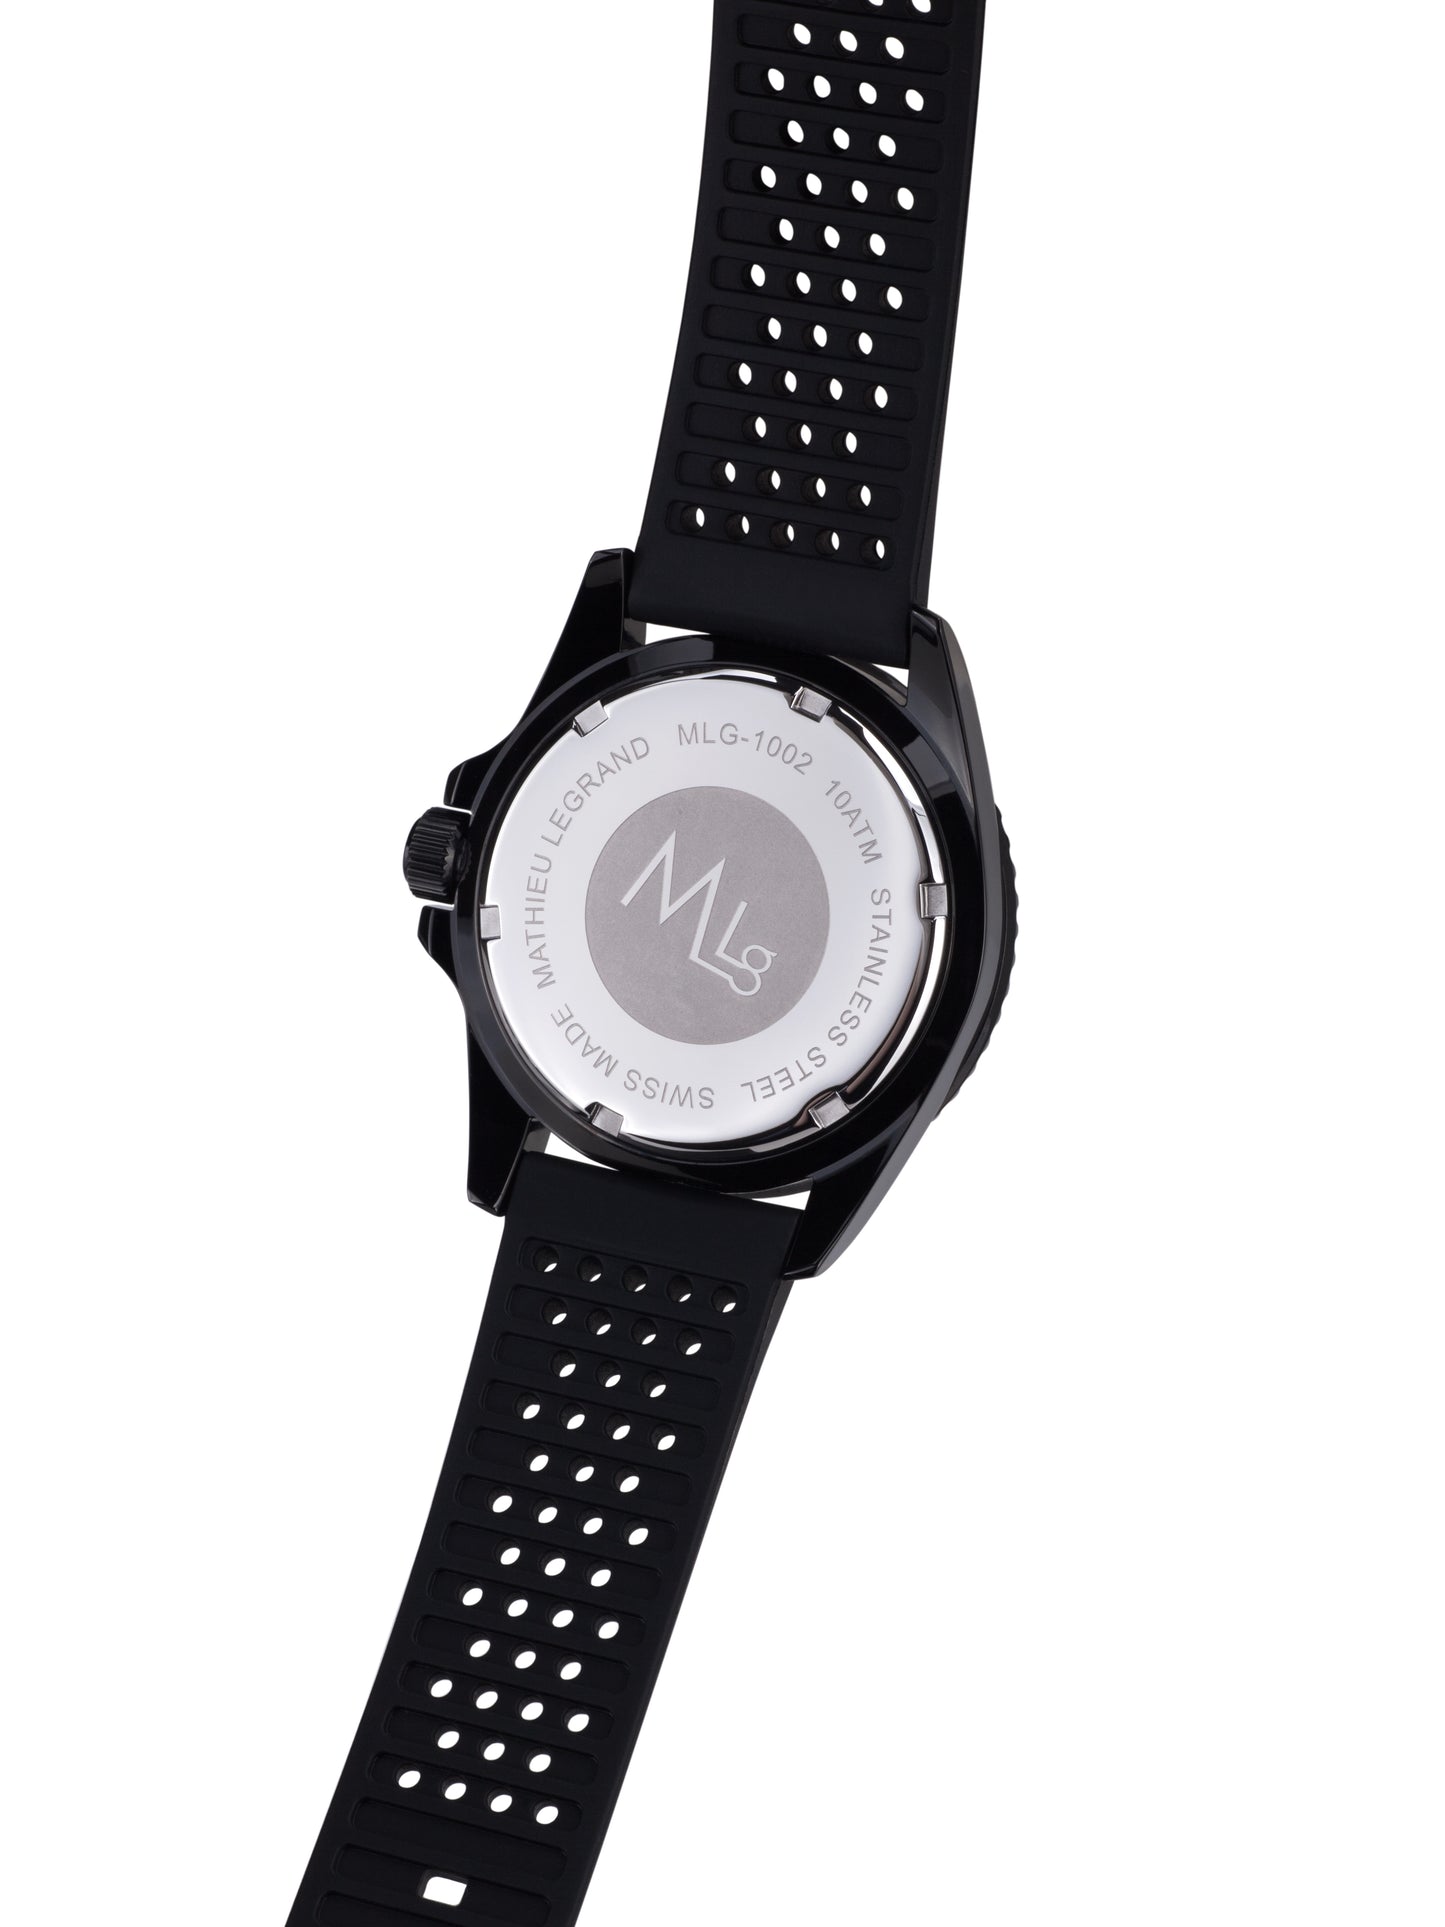 Automatic watches — Marin — Mathieu Legrand — black IP black silicone